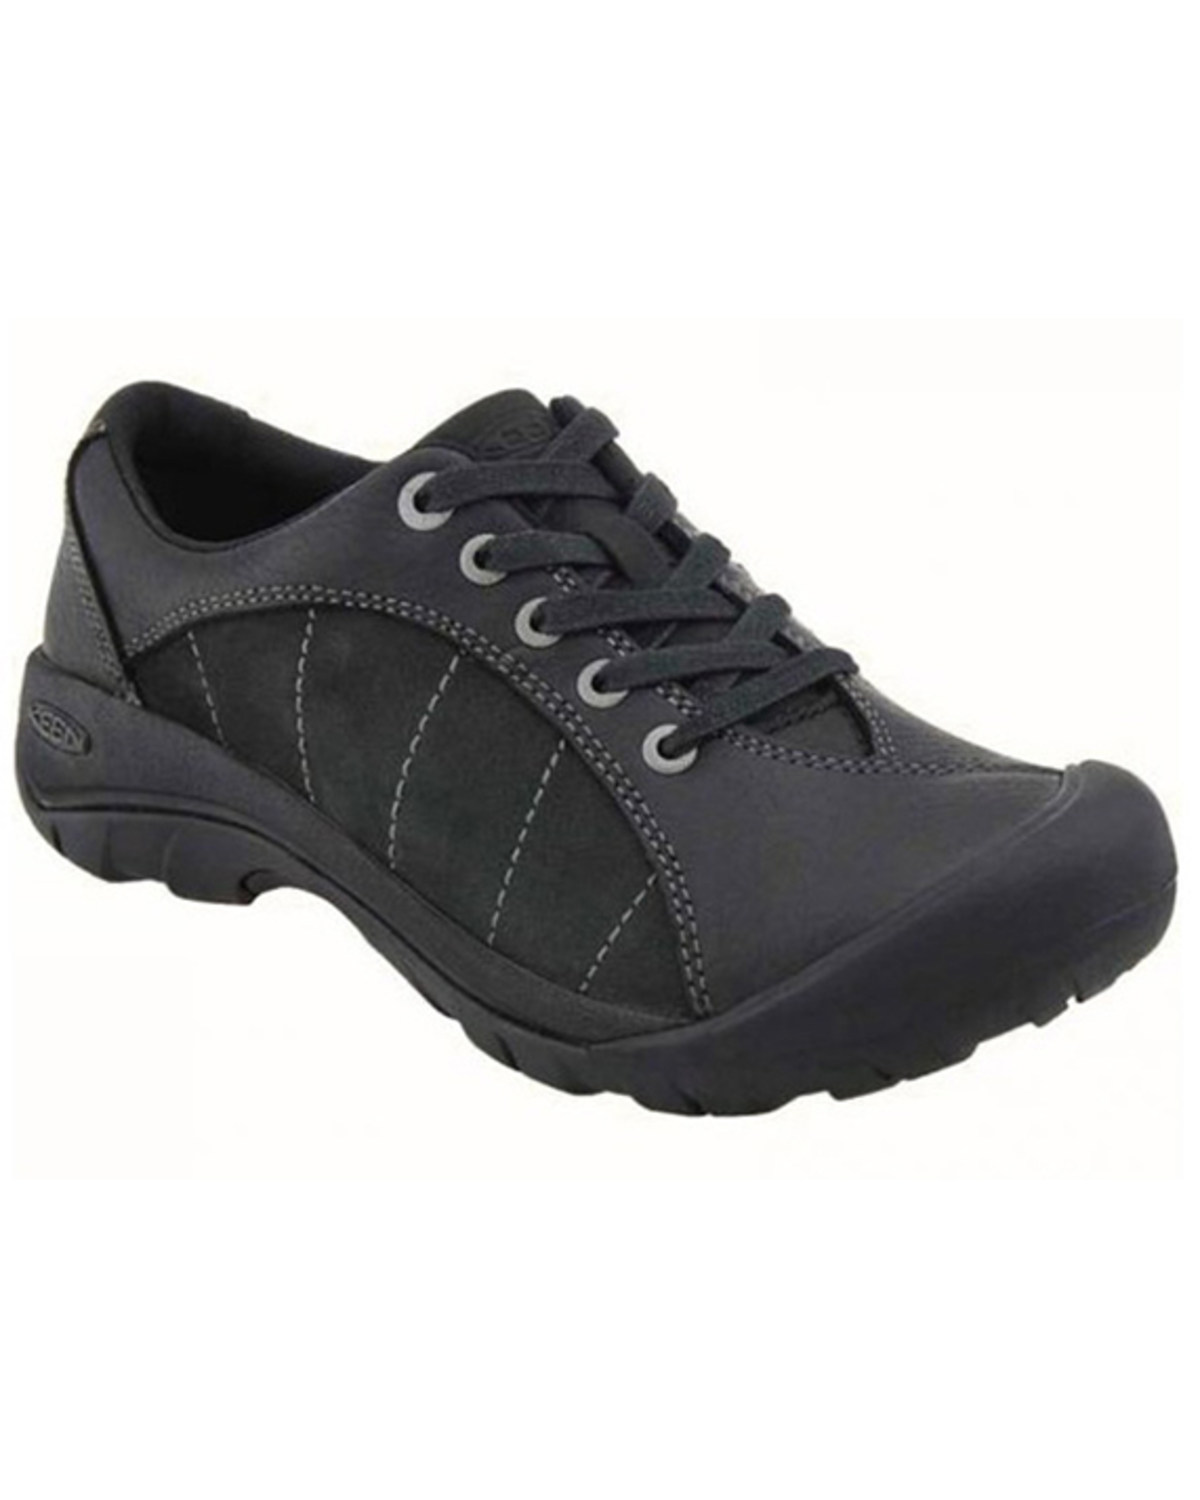 Keen Women's Presidio Hiking Shoes - Soft Toe